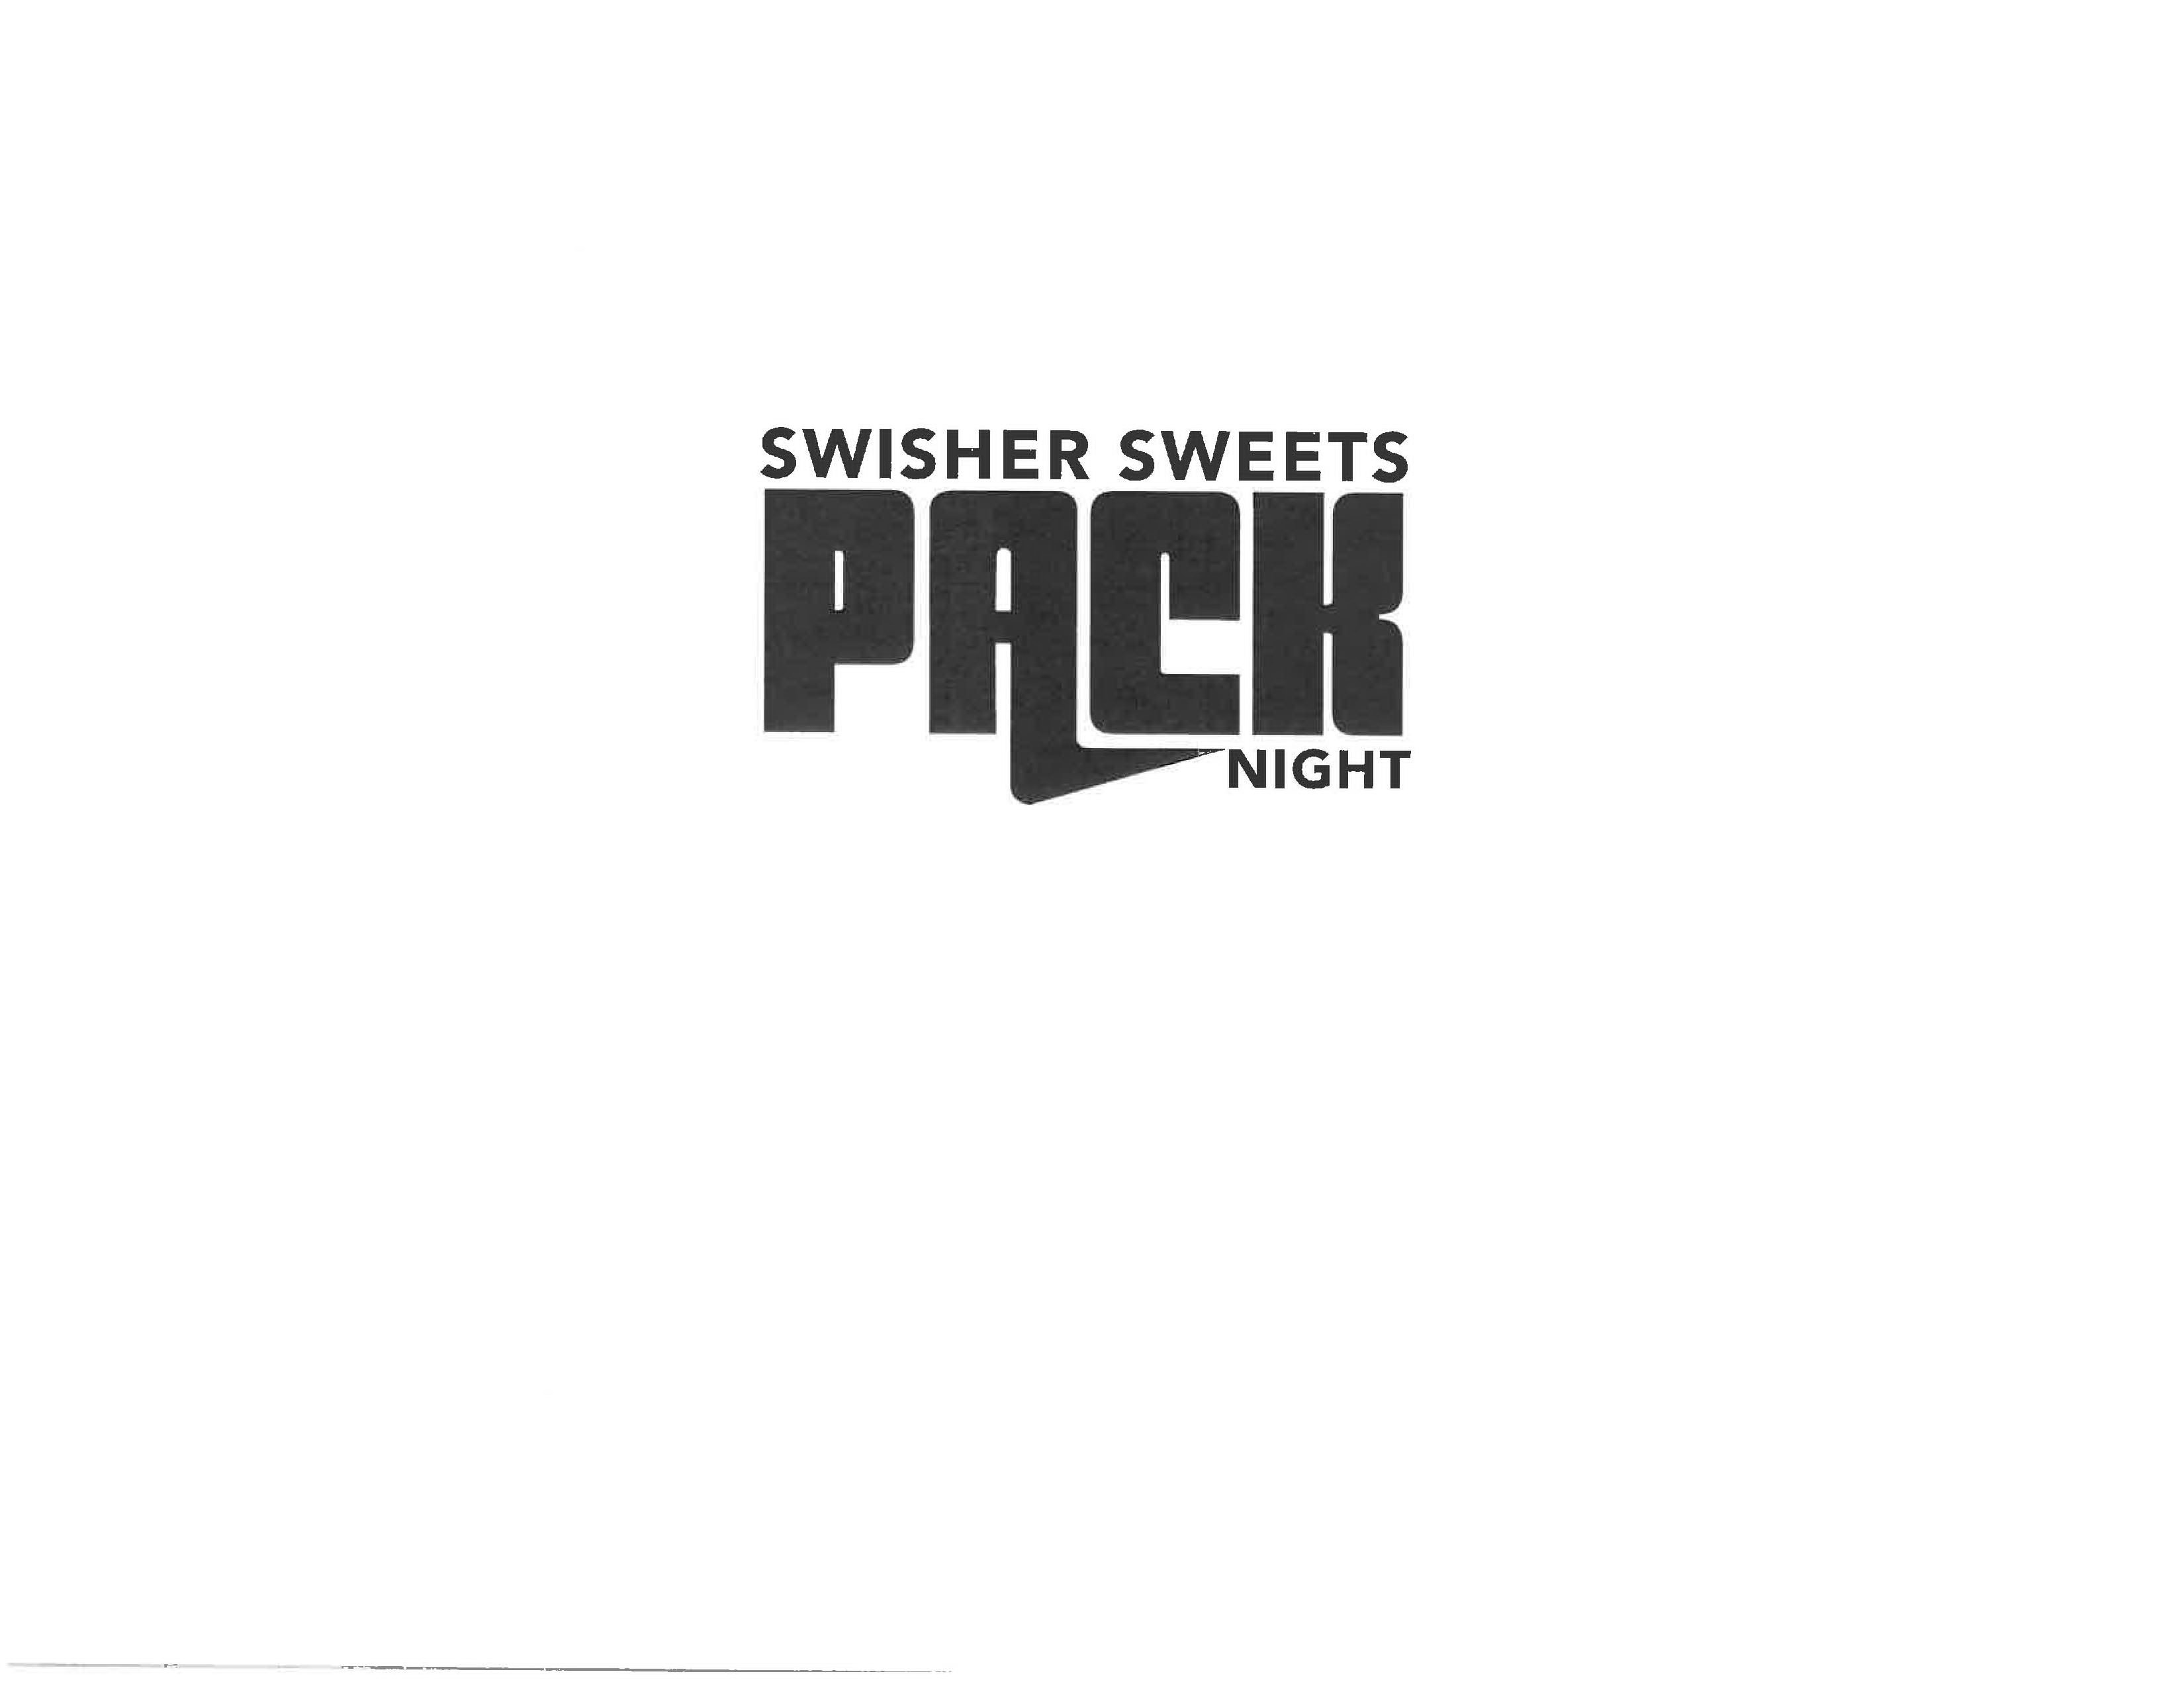  SWISHER SWEETS PACK NIGHT